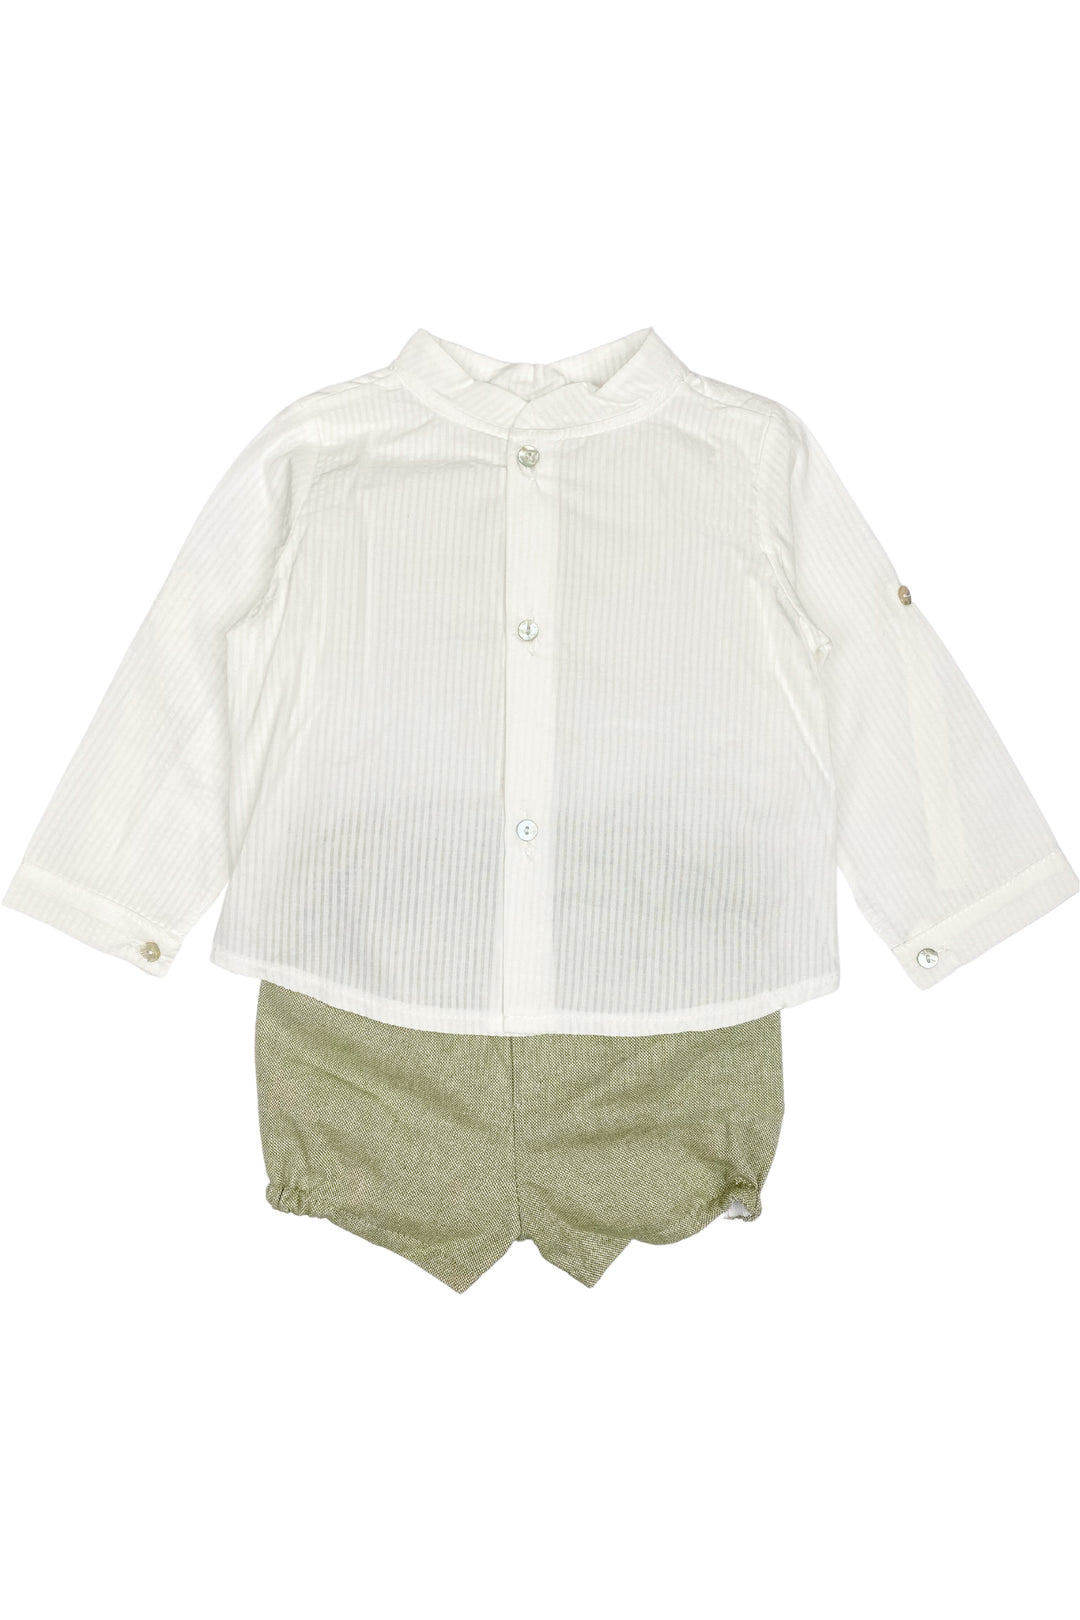 Valentina Bebes "Jasper" Shirt & Sage Green Shorts | Millie and John